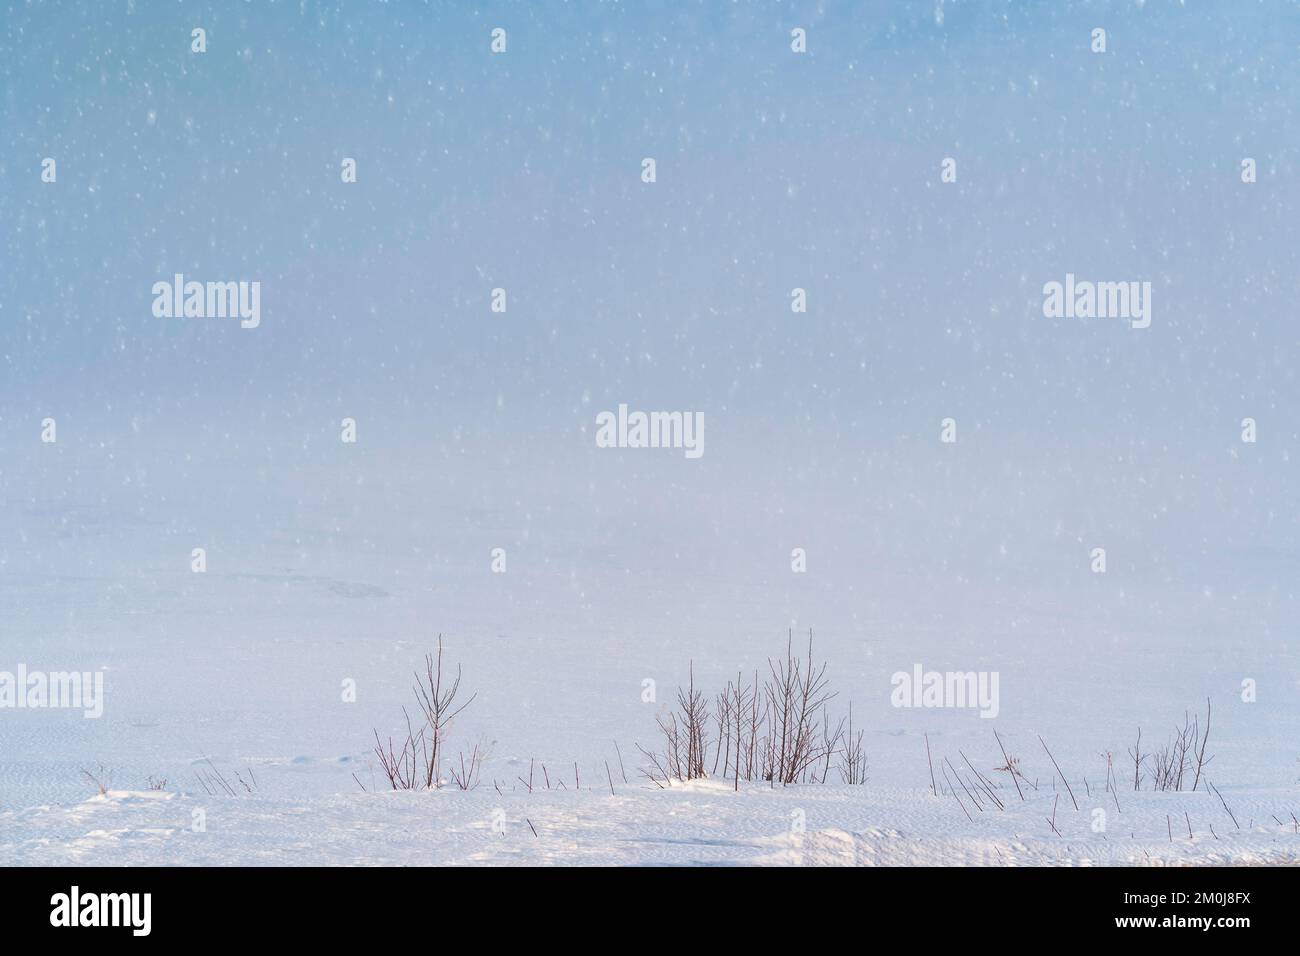 Mist desending on a frozen field of snow. Stock Photo